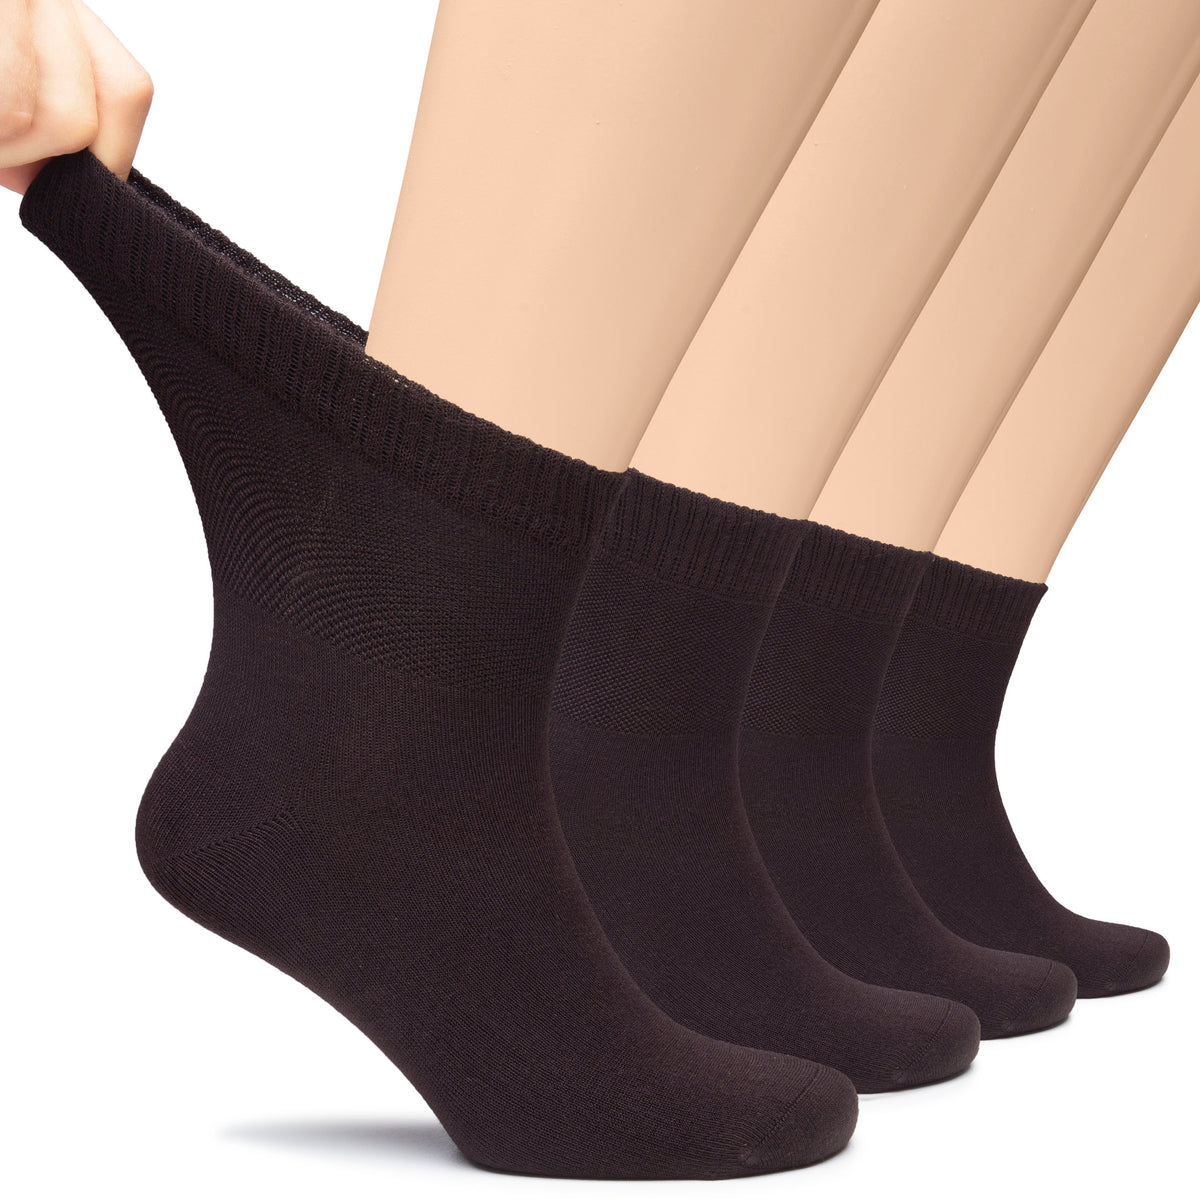 Hugh Ugoli Lightweight Men's Diabetic Ankle Socks Bamboo Thin Socks Seamless Toe and Non-Binding Top, 4 Pairs, Shoe Size 8-11/11-13 | Shoe Size: 11-13 | Charcoal